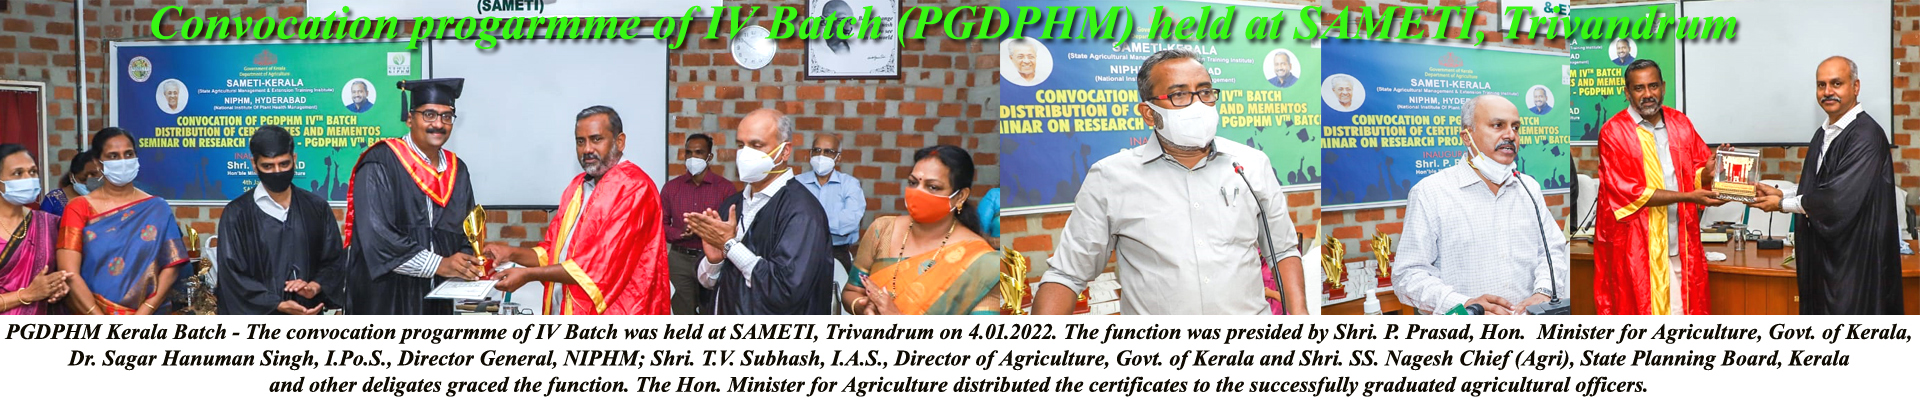 PGDPHM - Kerala Batch Convocation